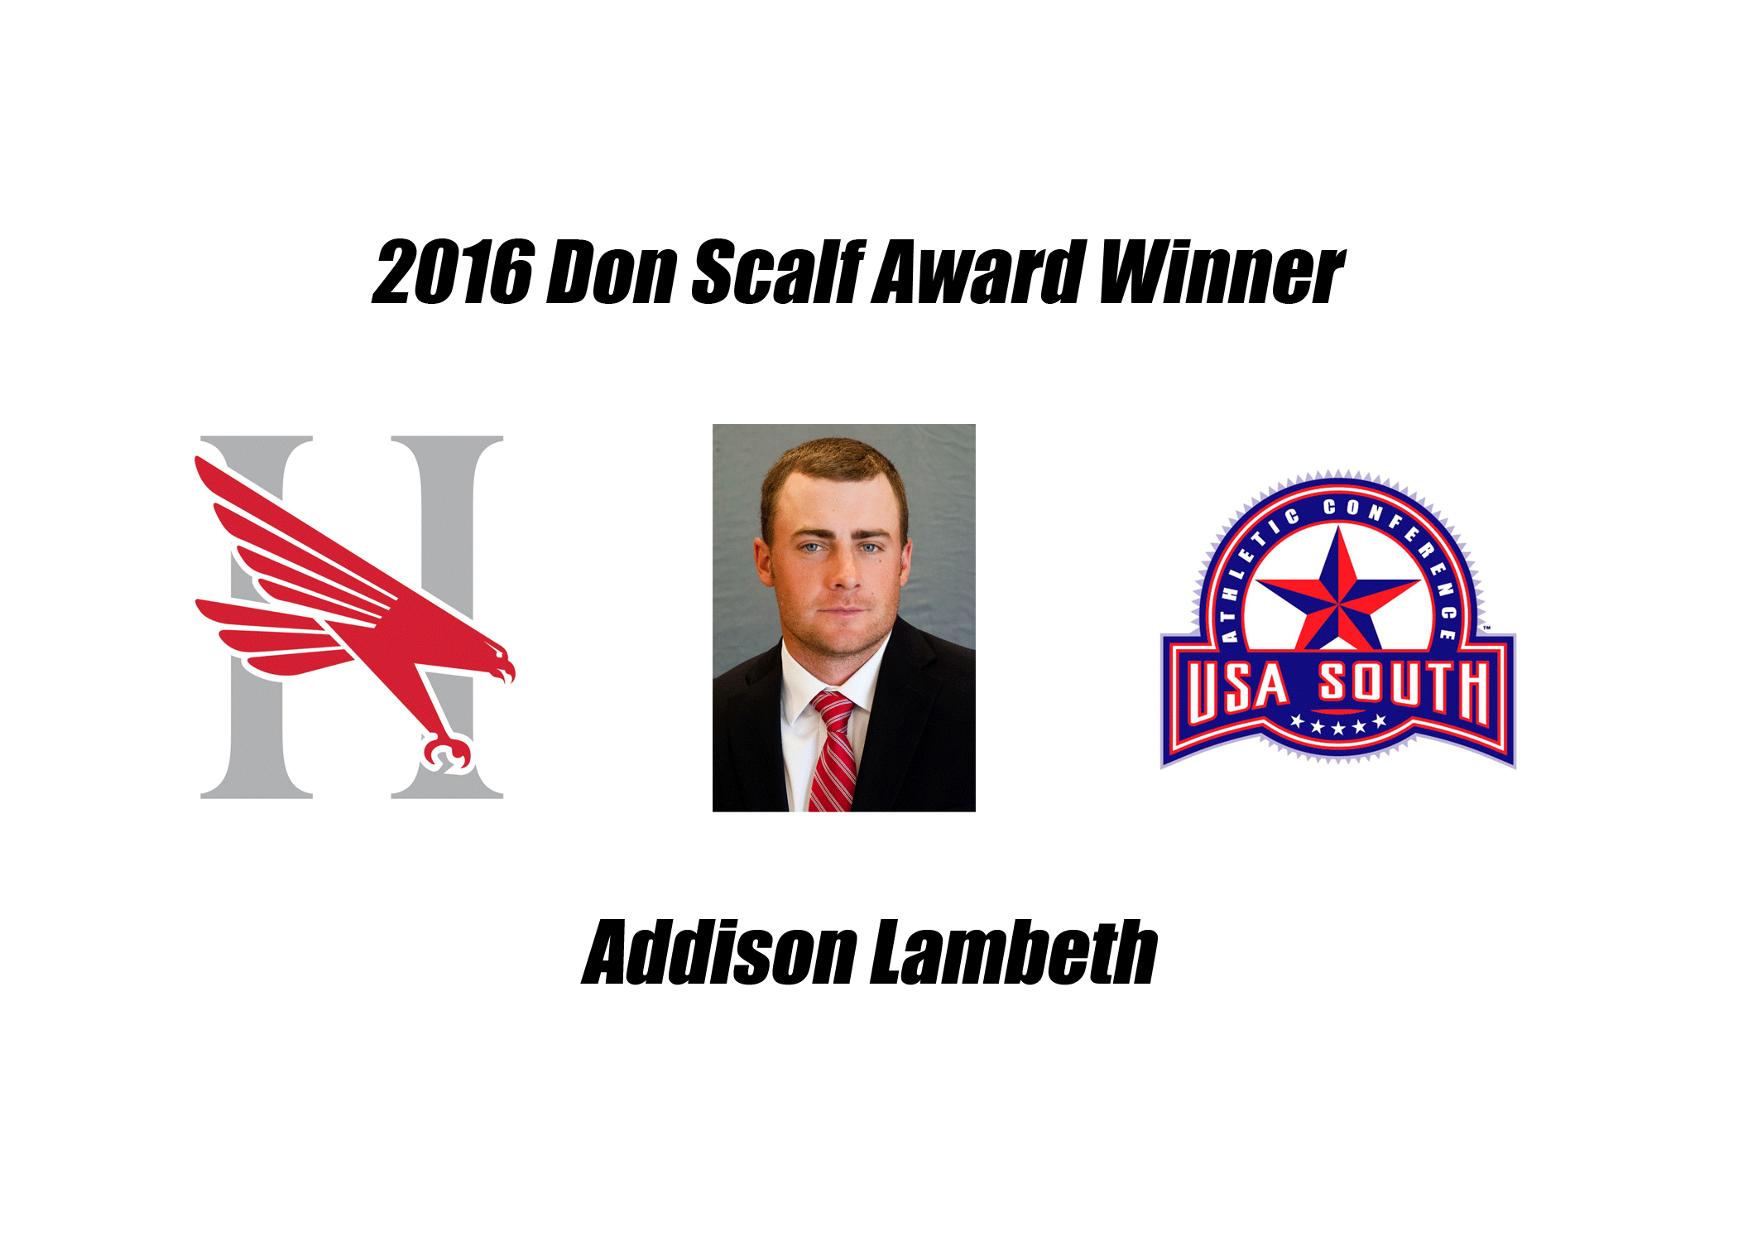 USA South names Lambeth as Don Scalf Award winner